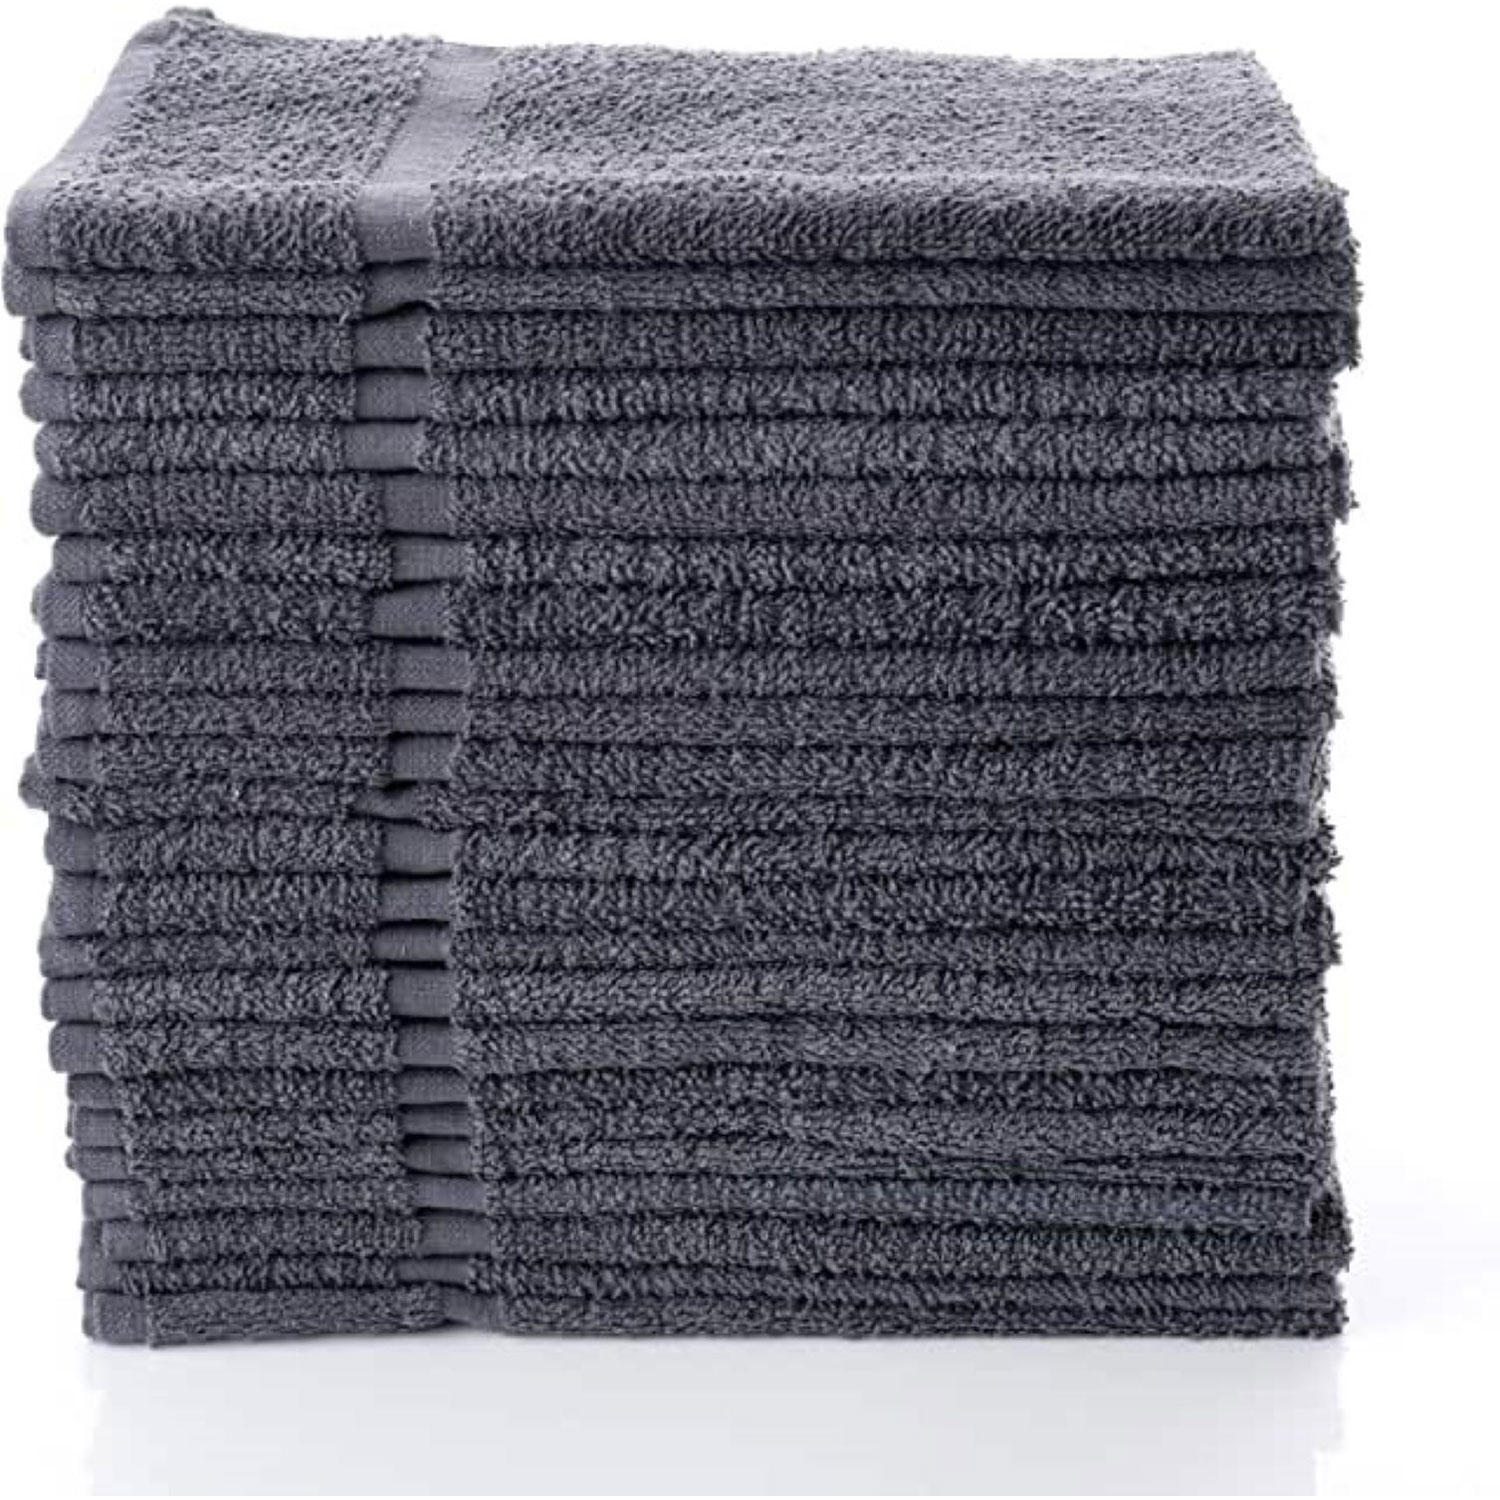 Hometex 100% Cotton Lightweight Hand Towels 12-pk. (16' x 27'), Gray